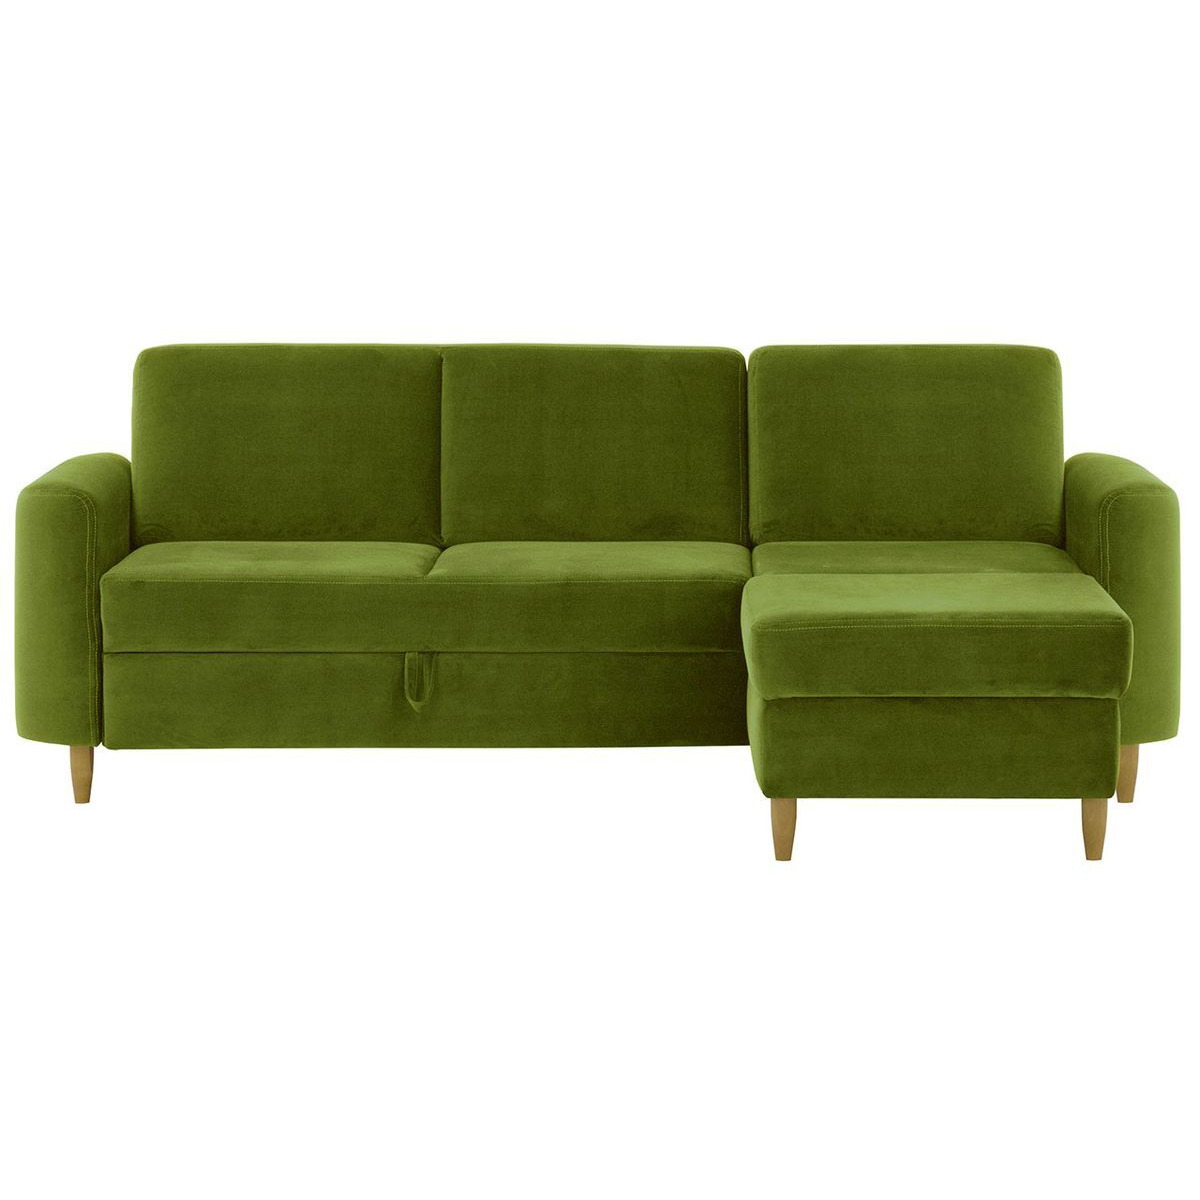 Elegance Corner Sofa Bed With Storage, dark green - image 1